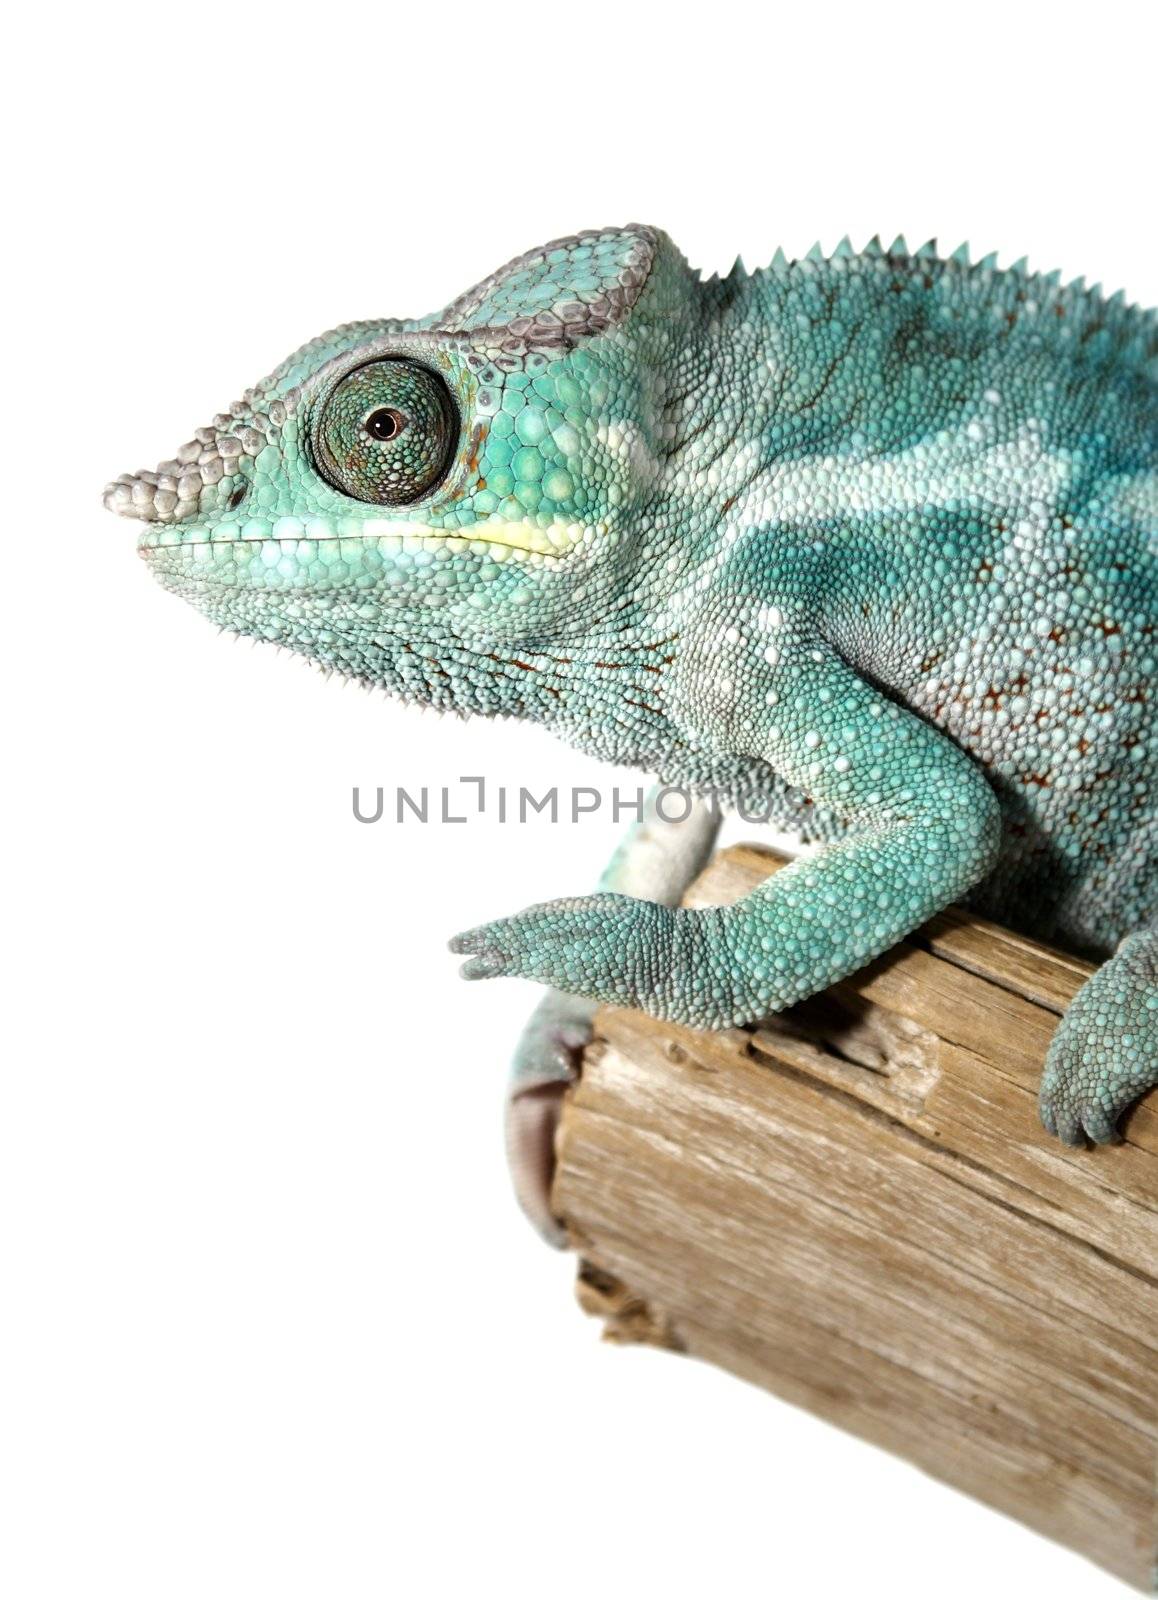 Nice colorful male chameleon lizard